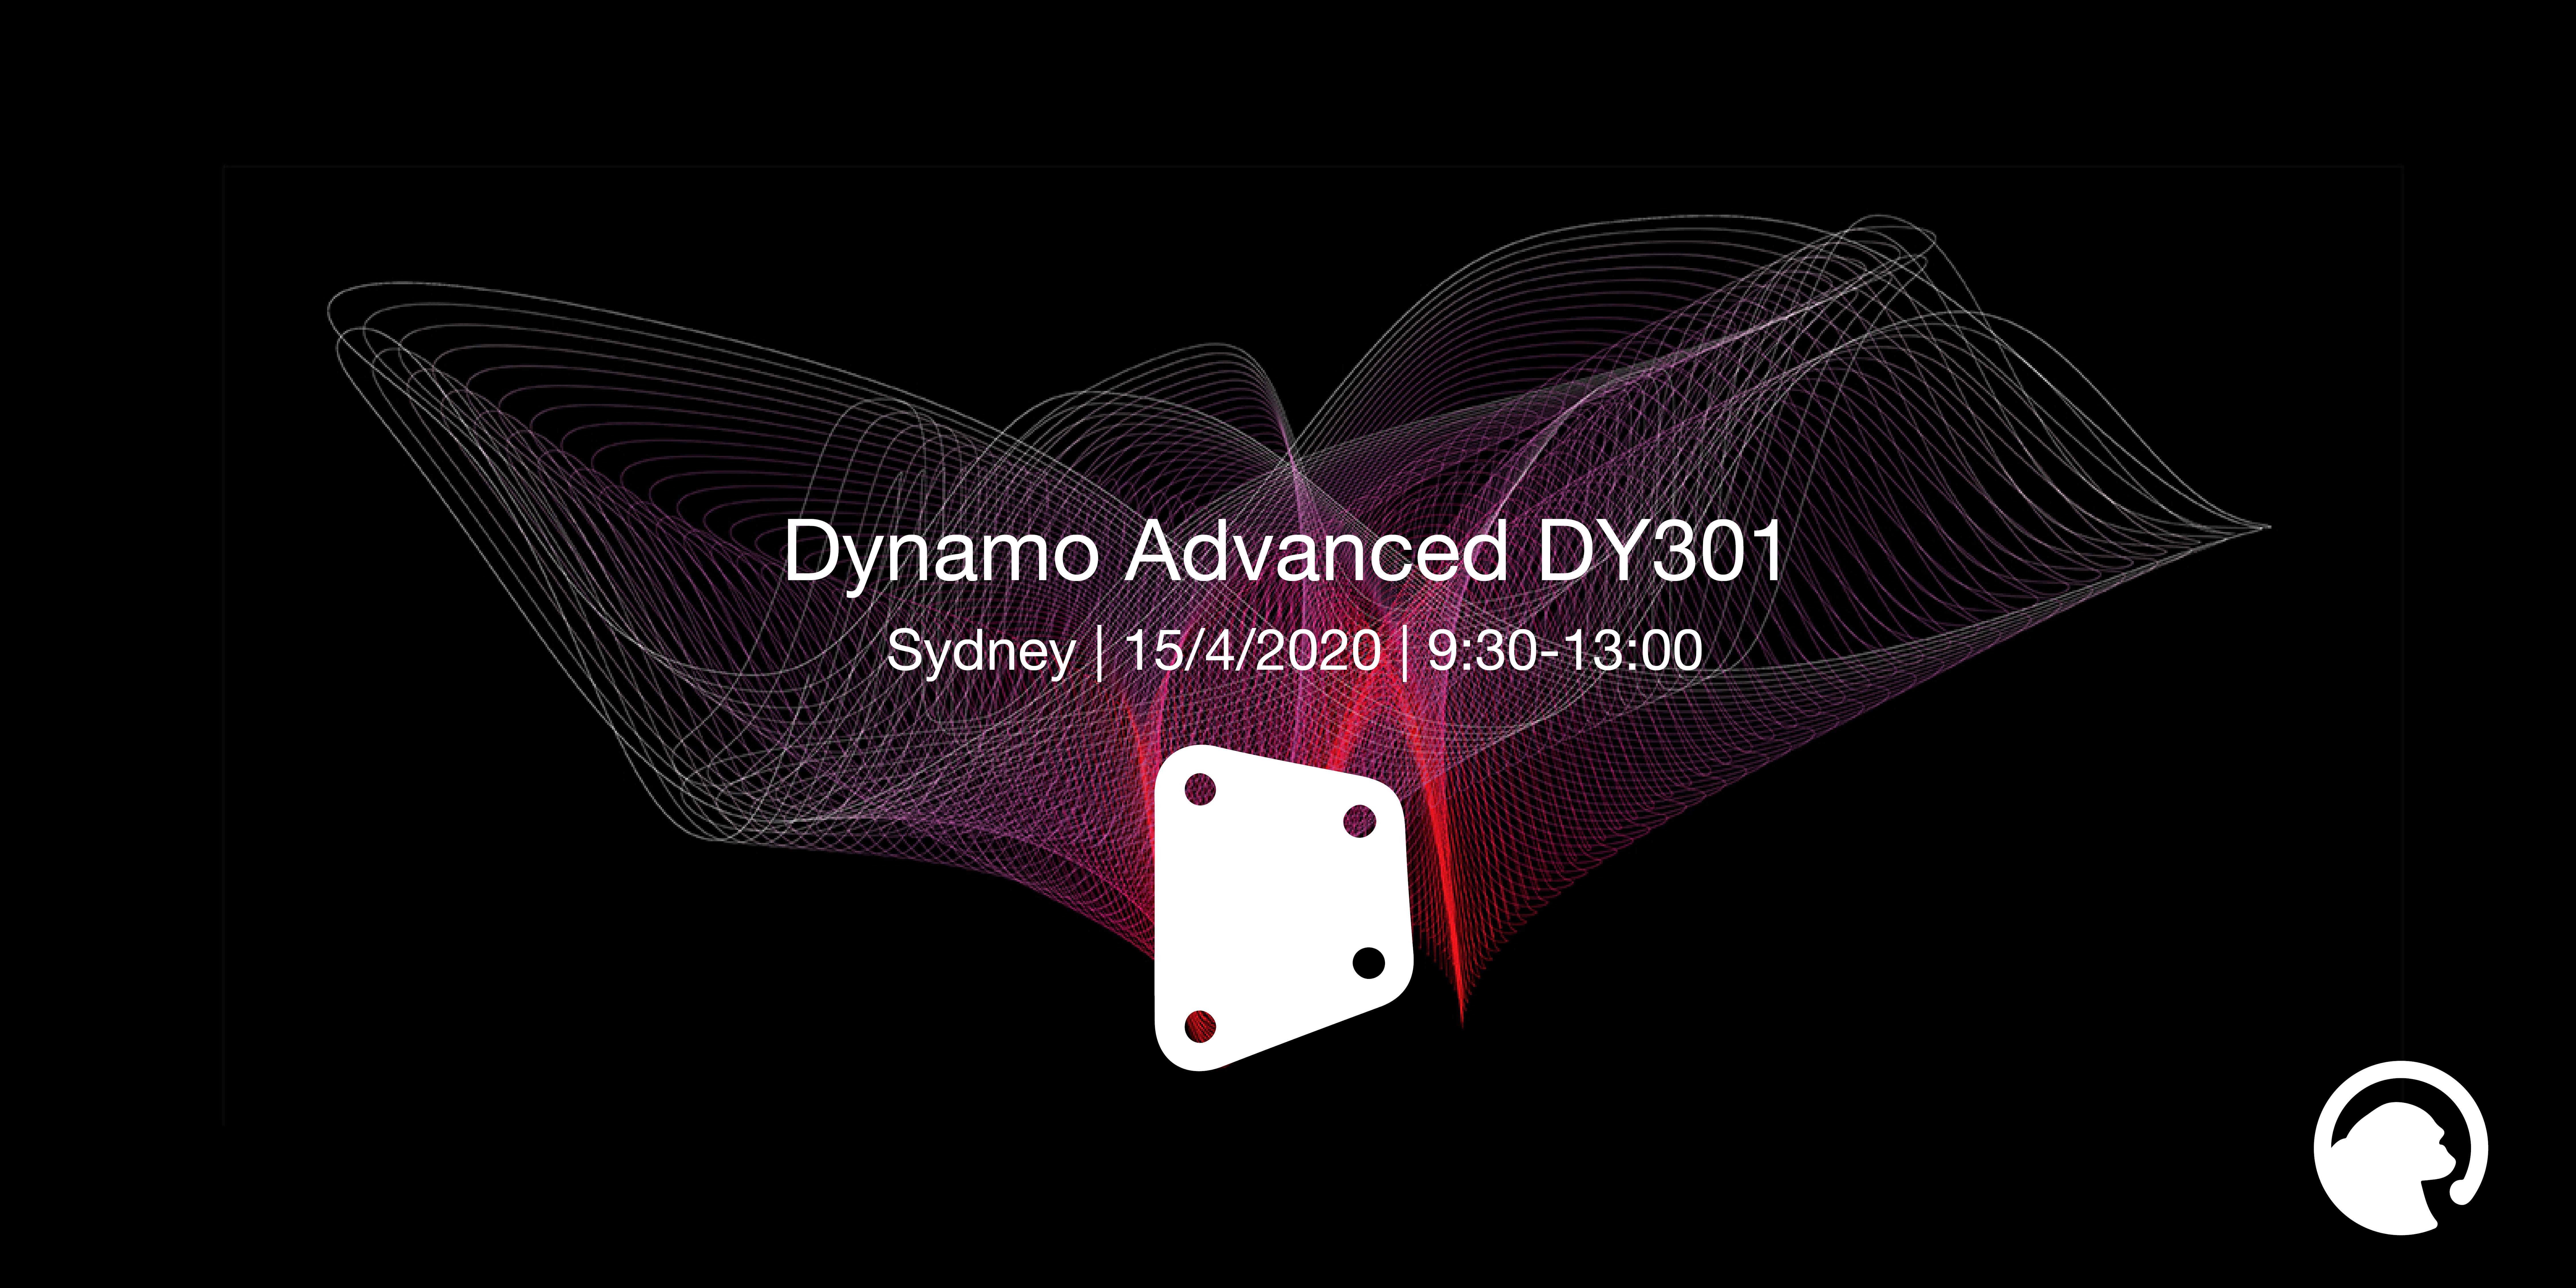 Dynamo Advanced DY301